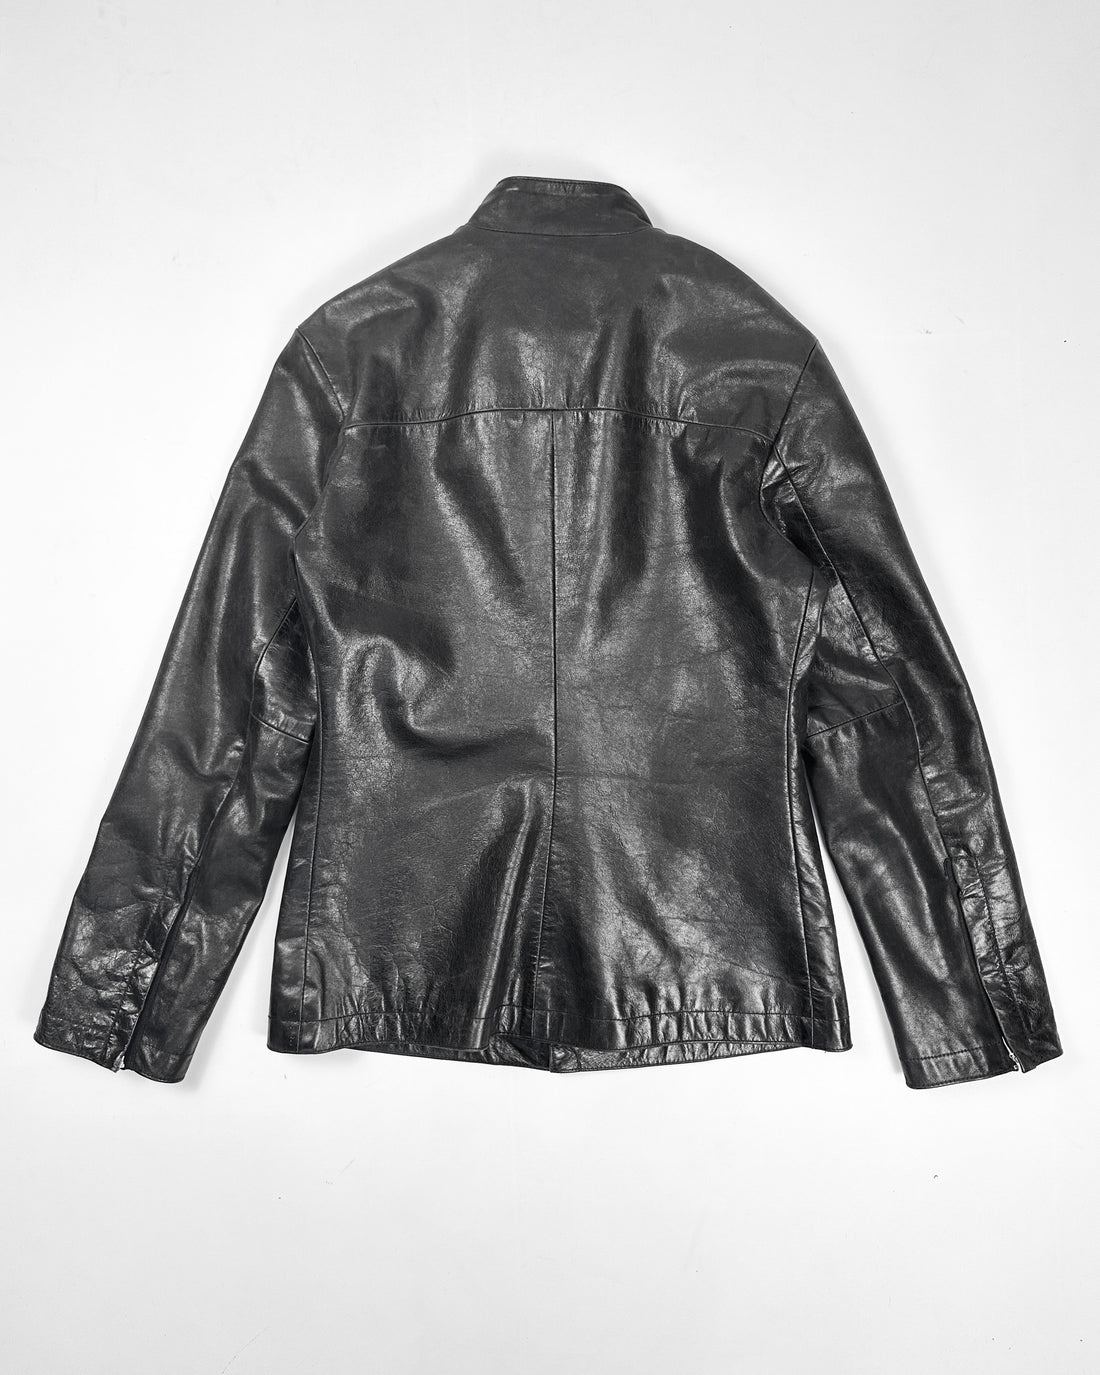 Diesel Black Soft Leather Jacket 1990's